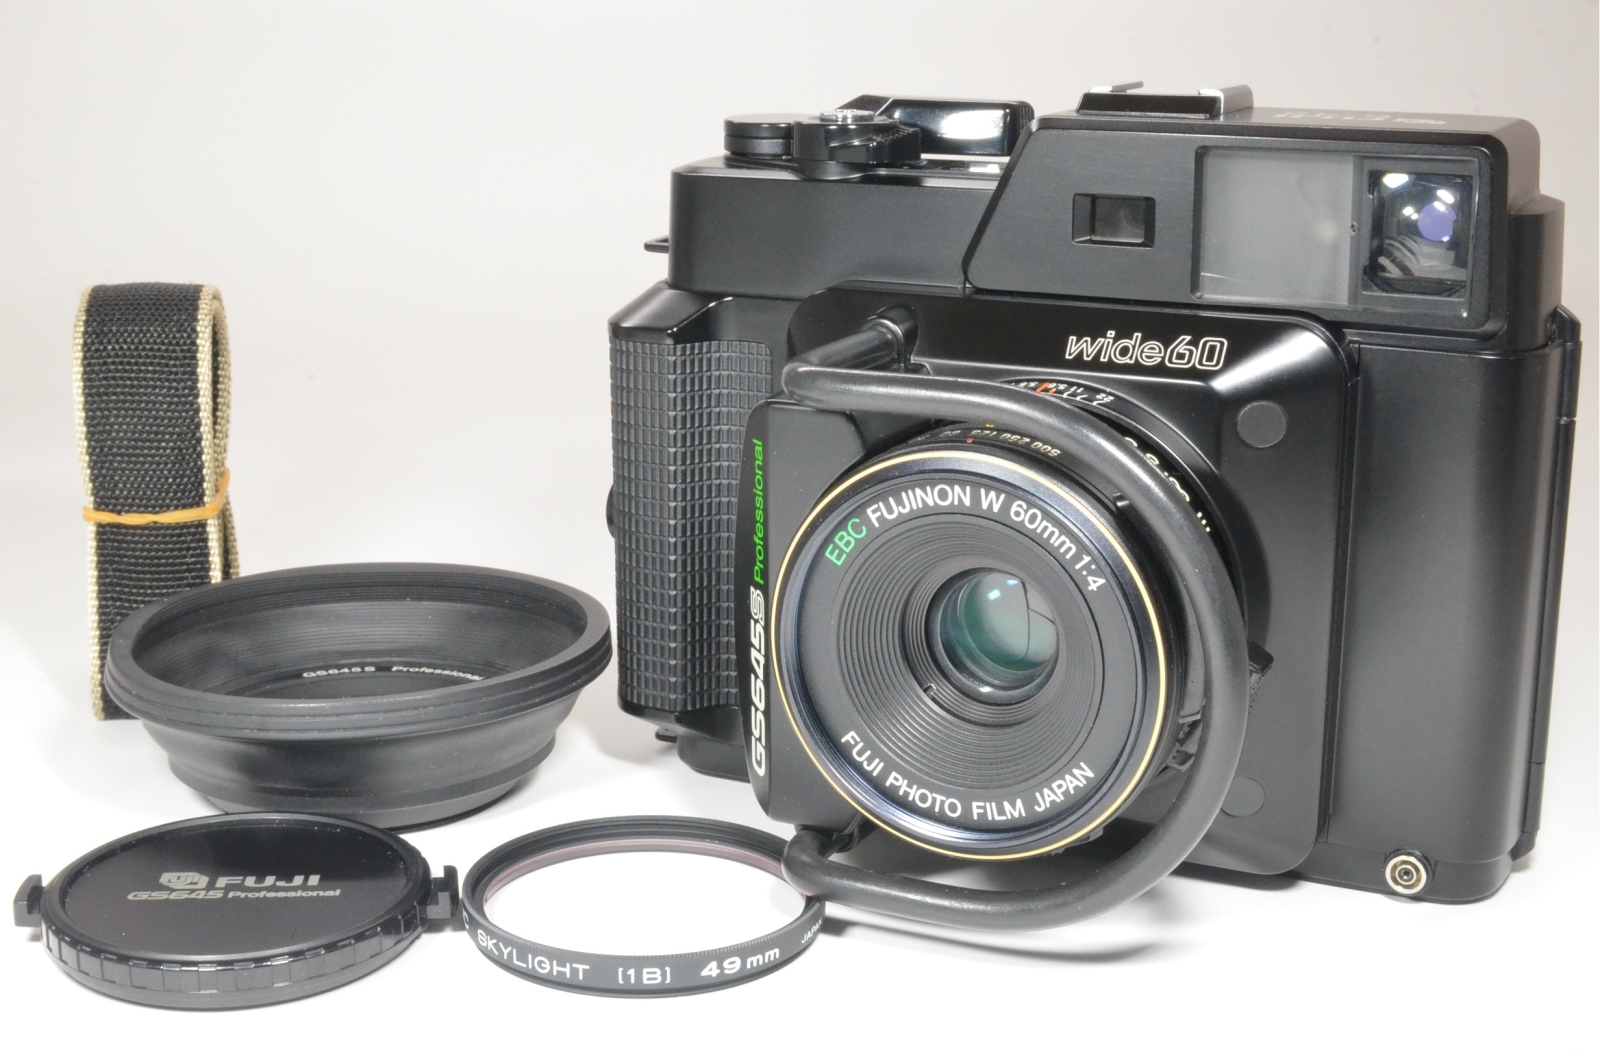 Fuji Fujifilm GS645S Fujinon W 60mm f4 camera from Japan Shooting 